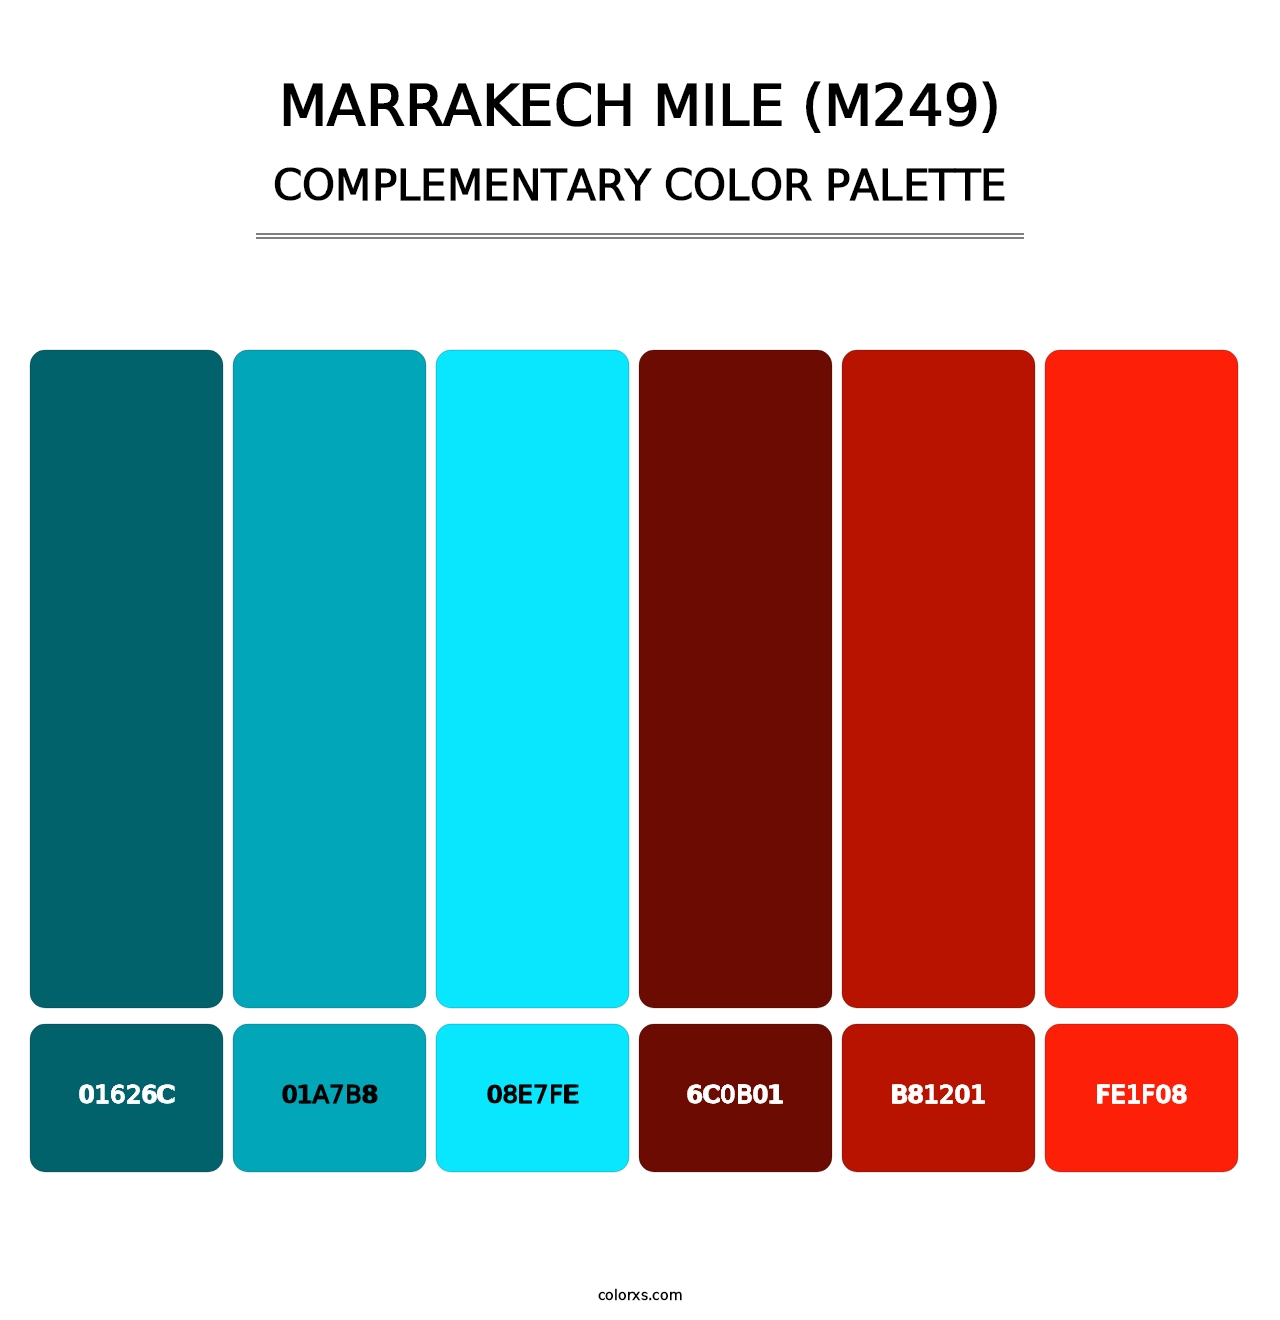 Marrakech Mile (M249) - Complementary Color Palette